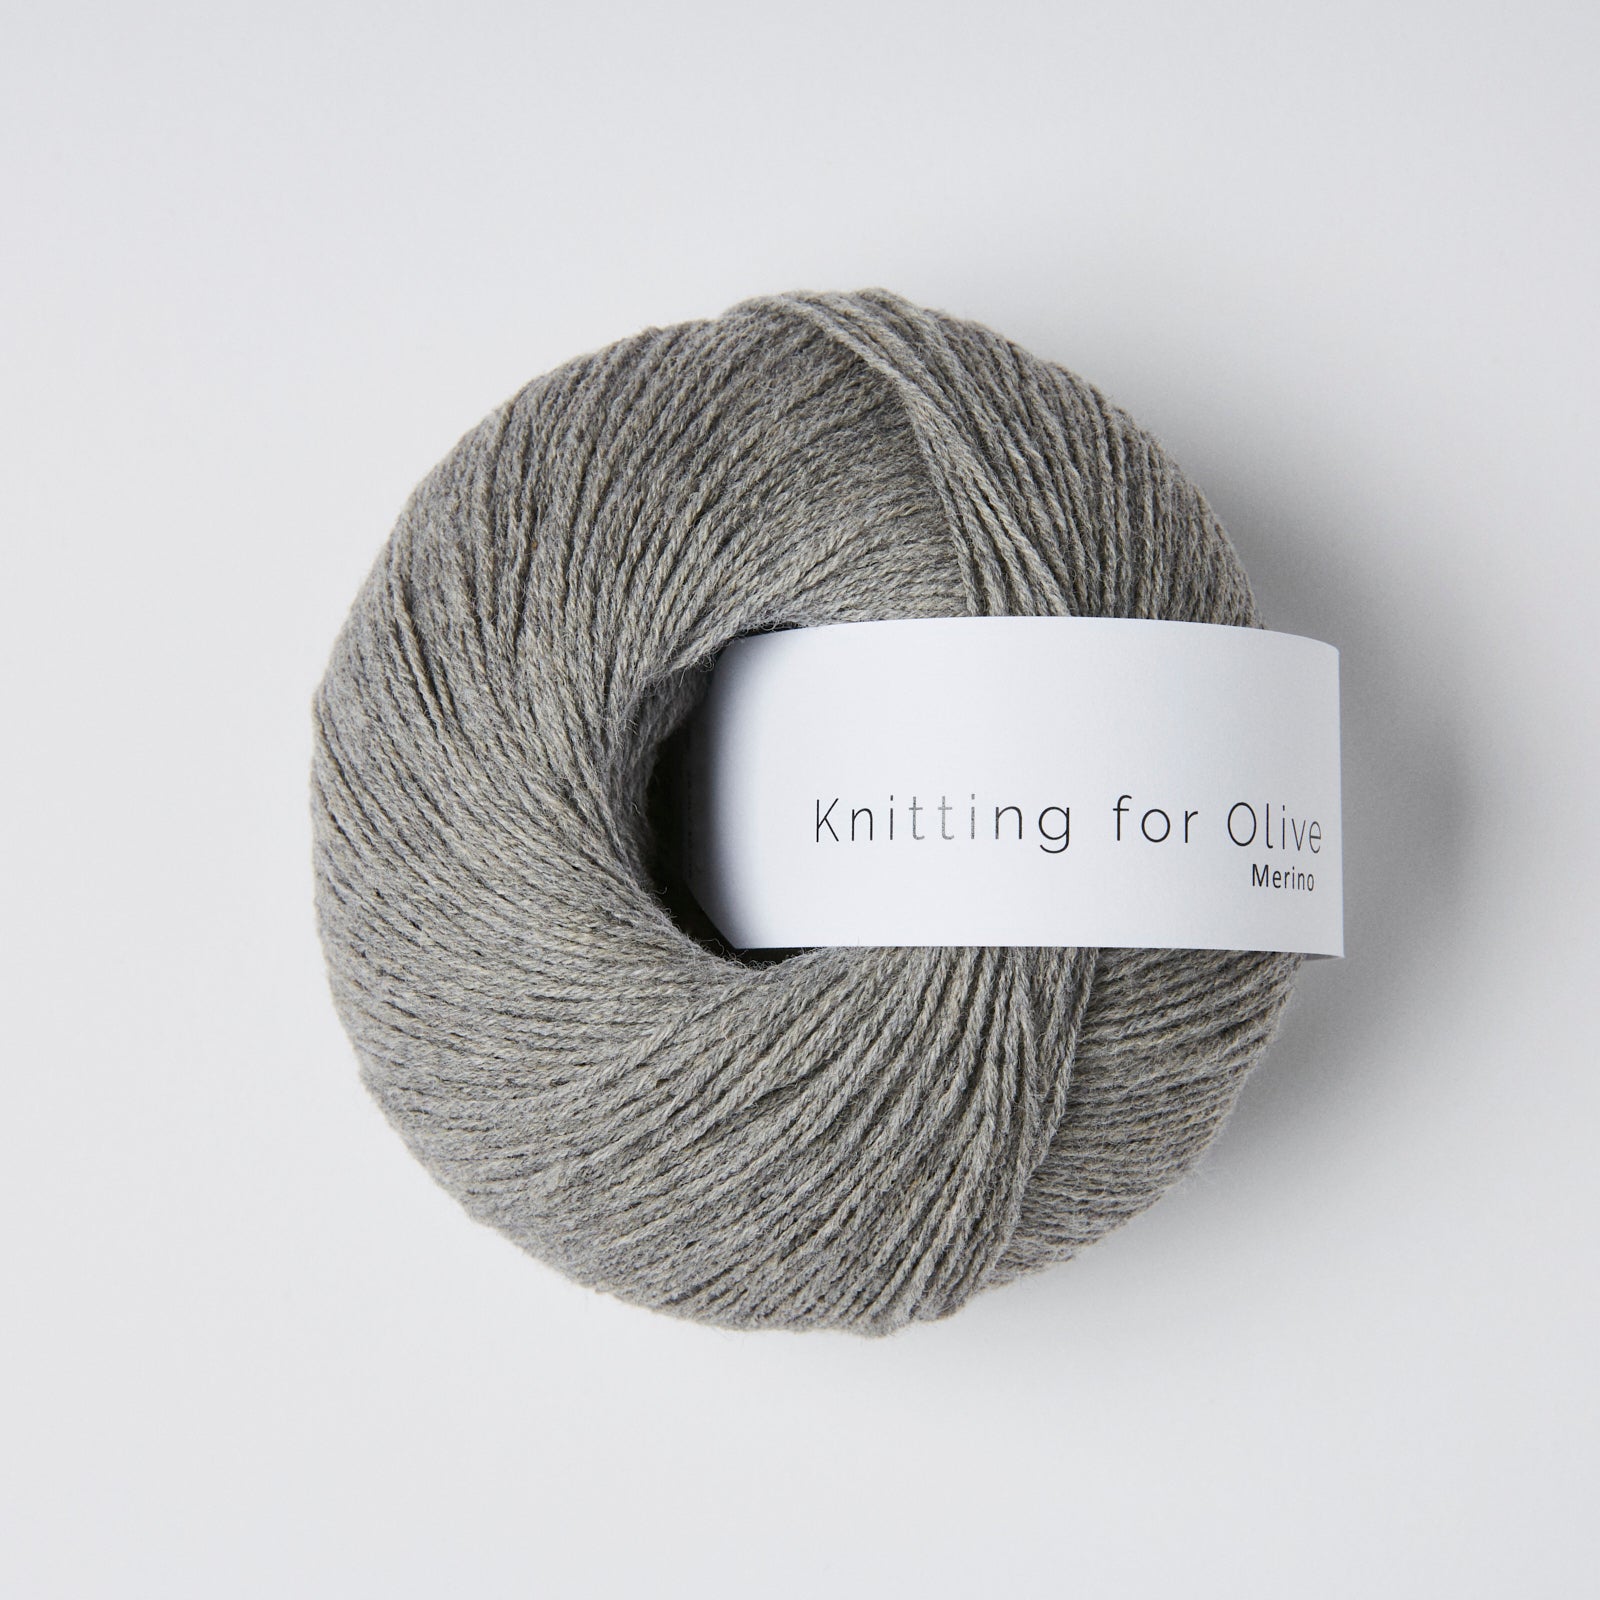 Knitting for Olive Merino - Rainy Day